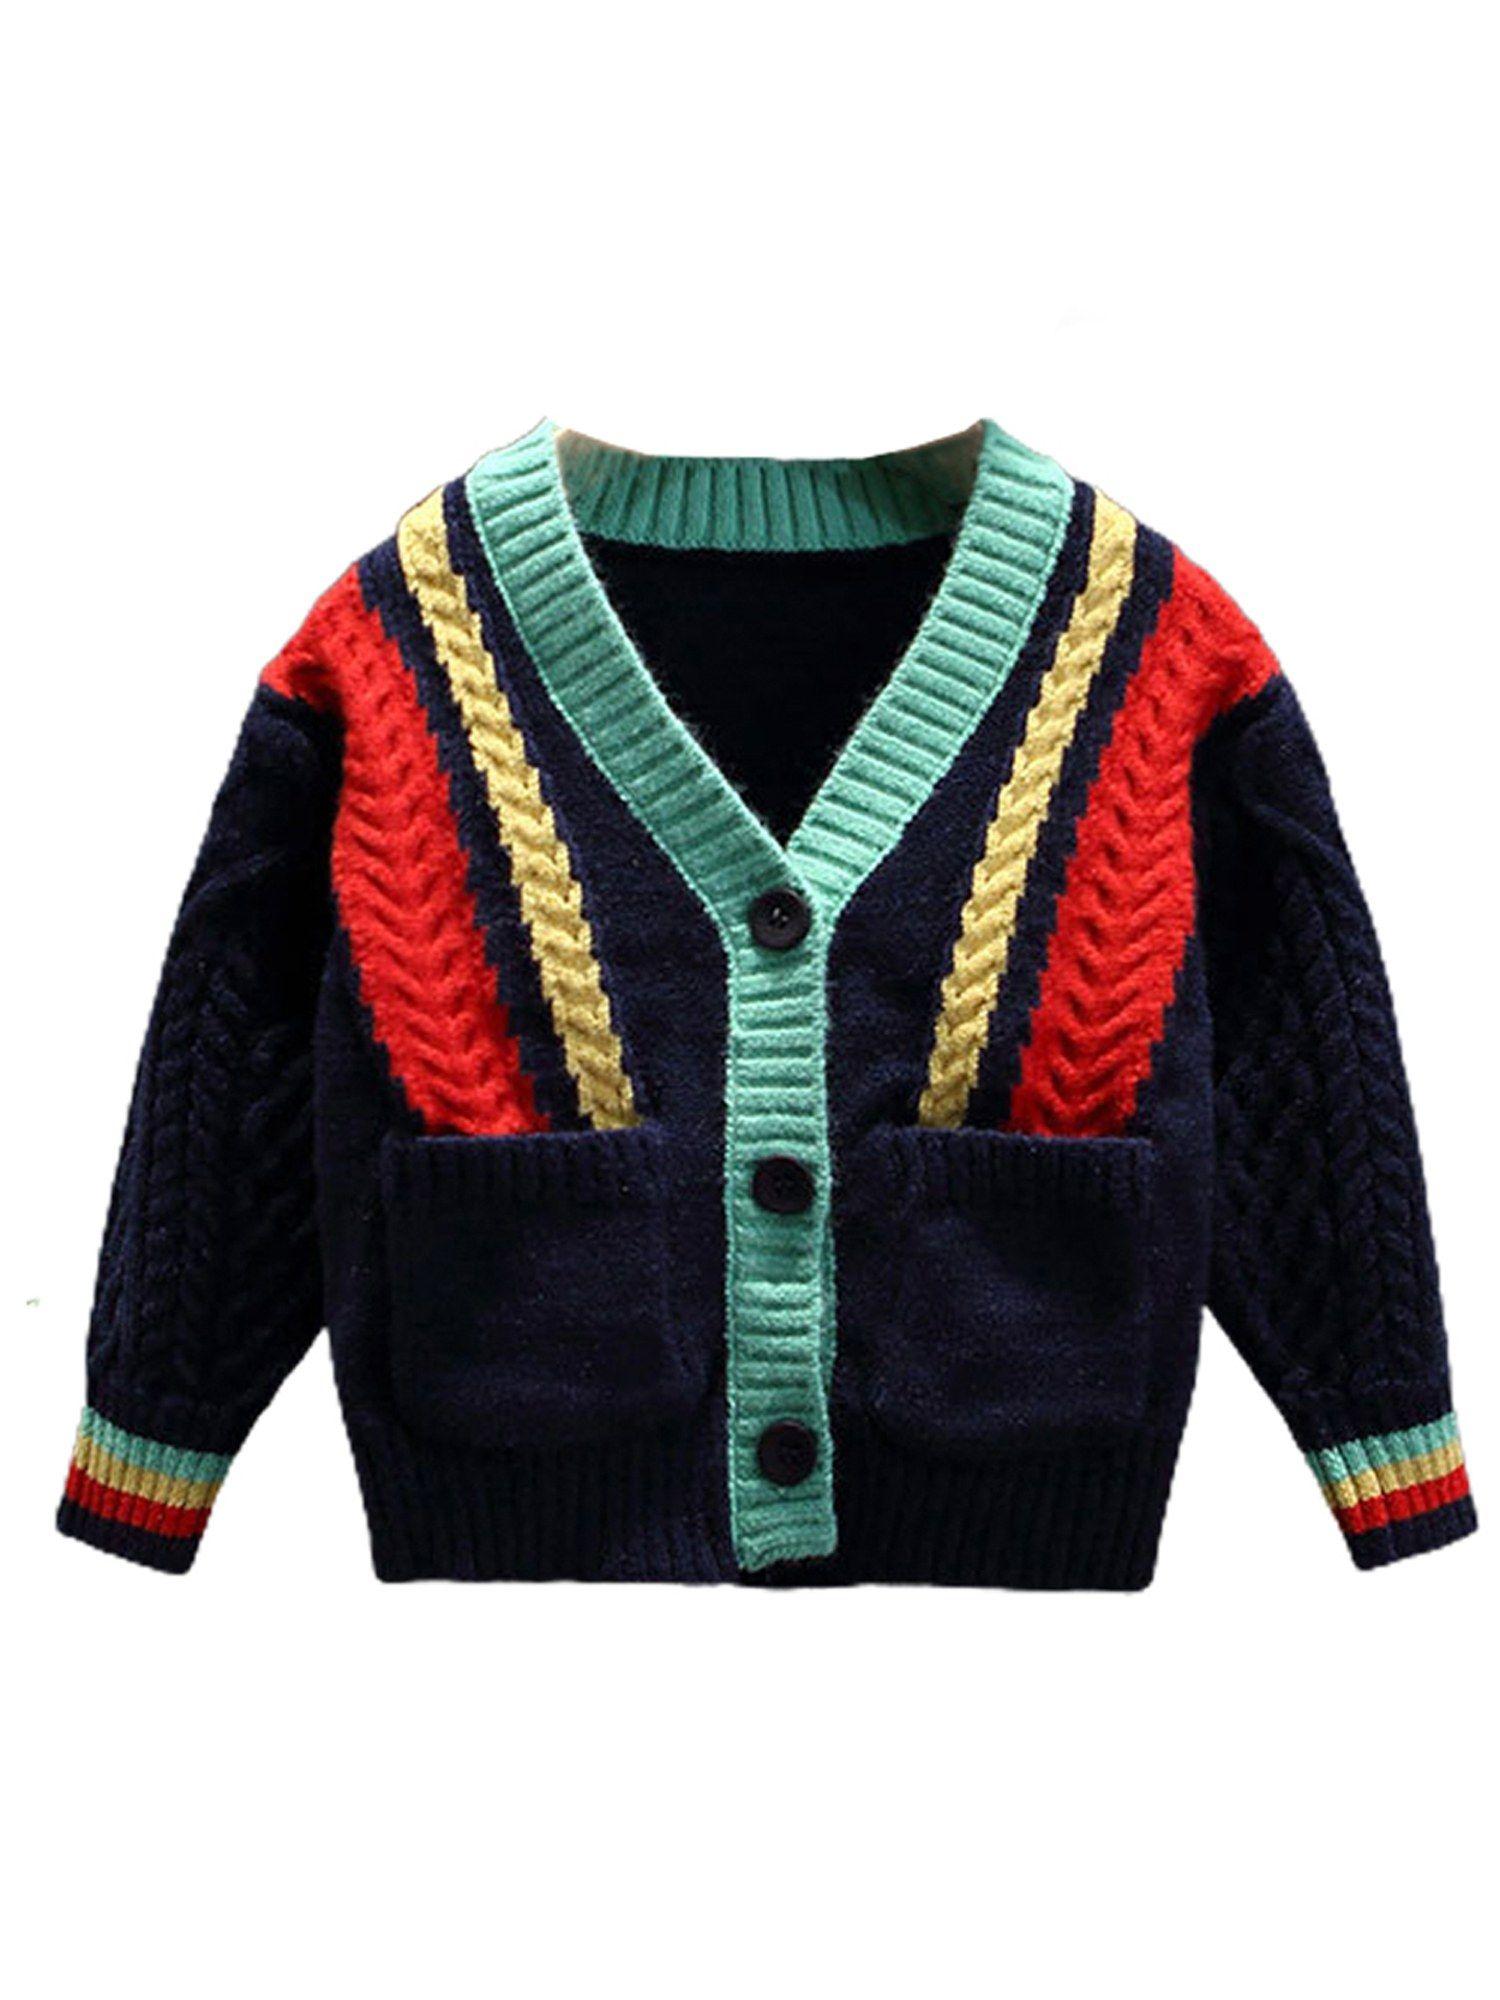 navy blue striking bold stripes cardigan sweater v neck front button